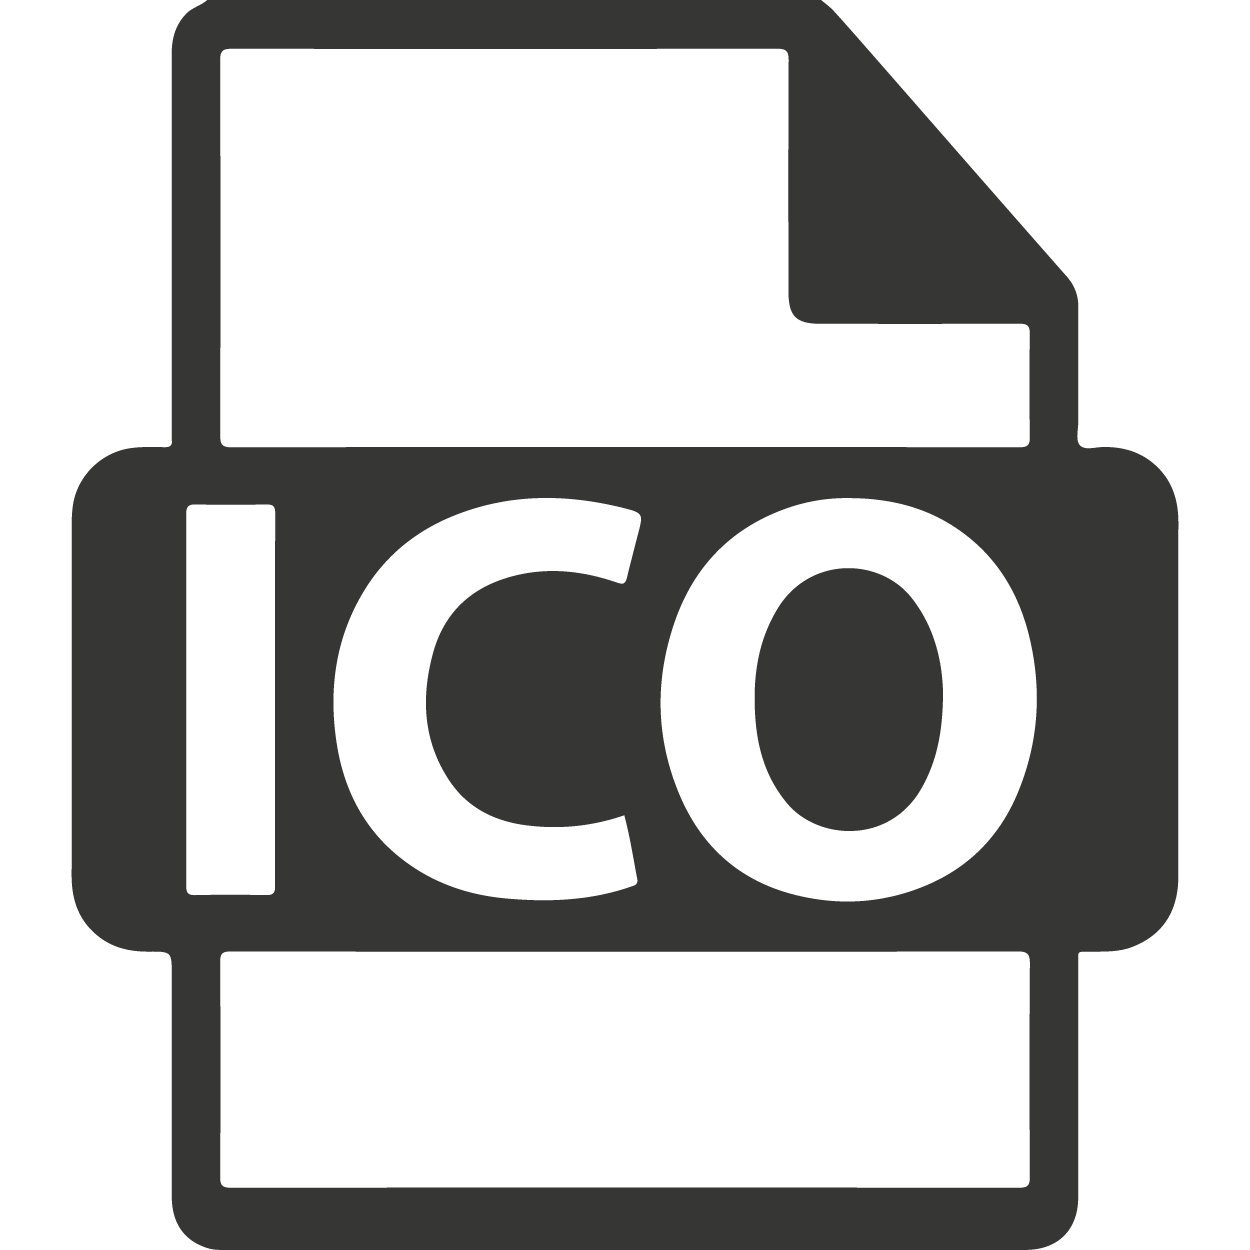 Ico News